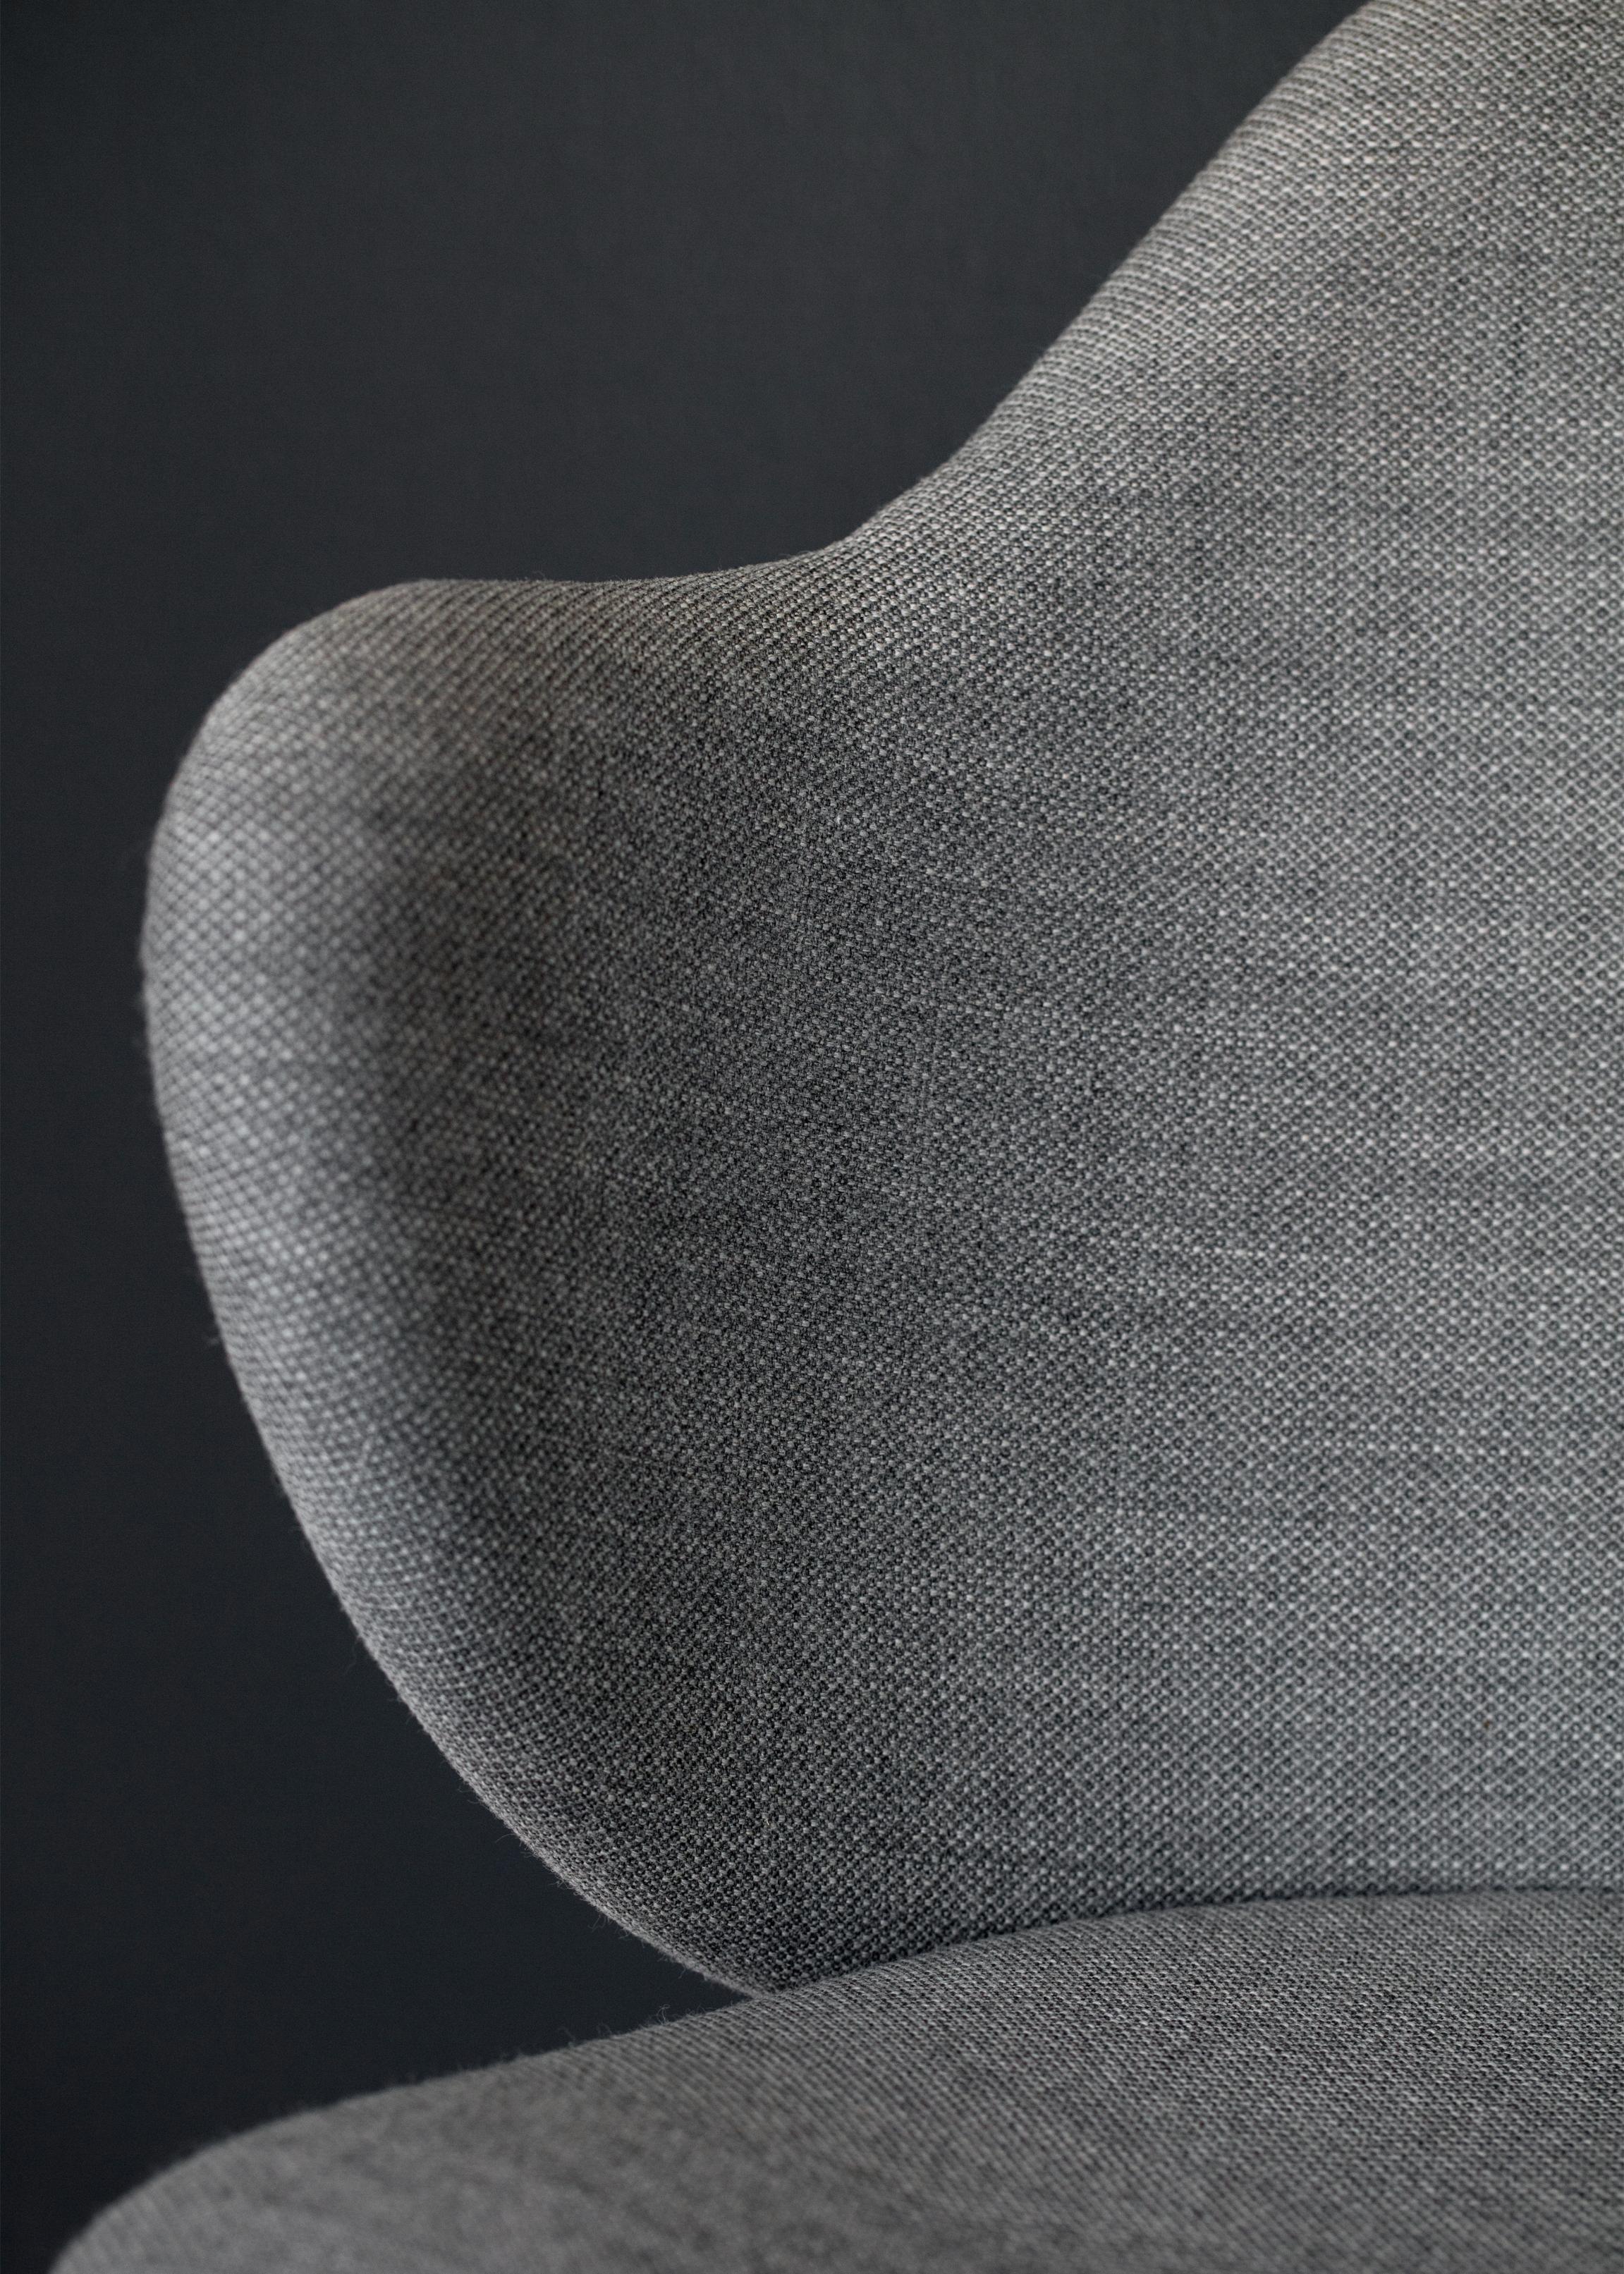 Dark Grey Fiord Lassen Chair by Lassen In New Condition For Sale In Geneve, CH